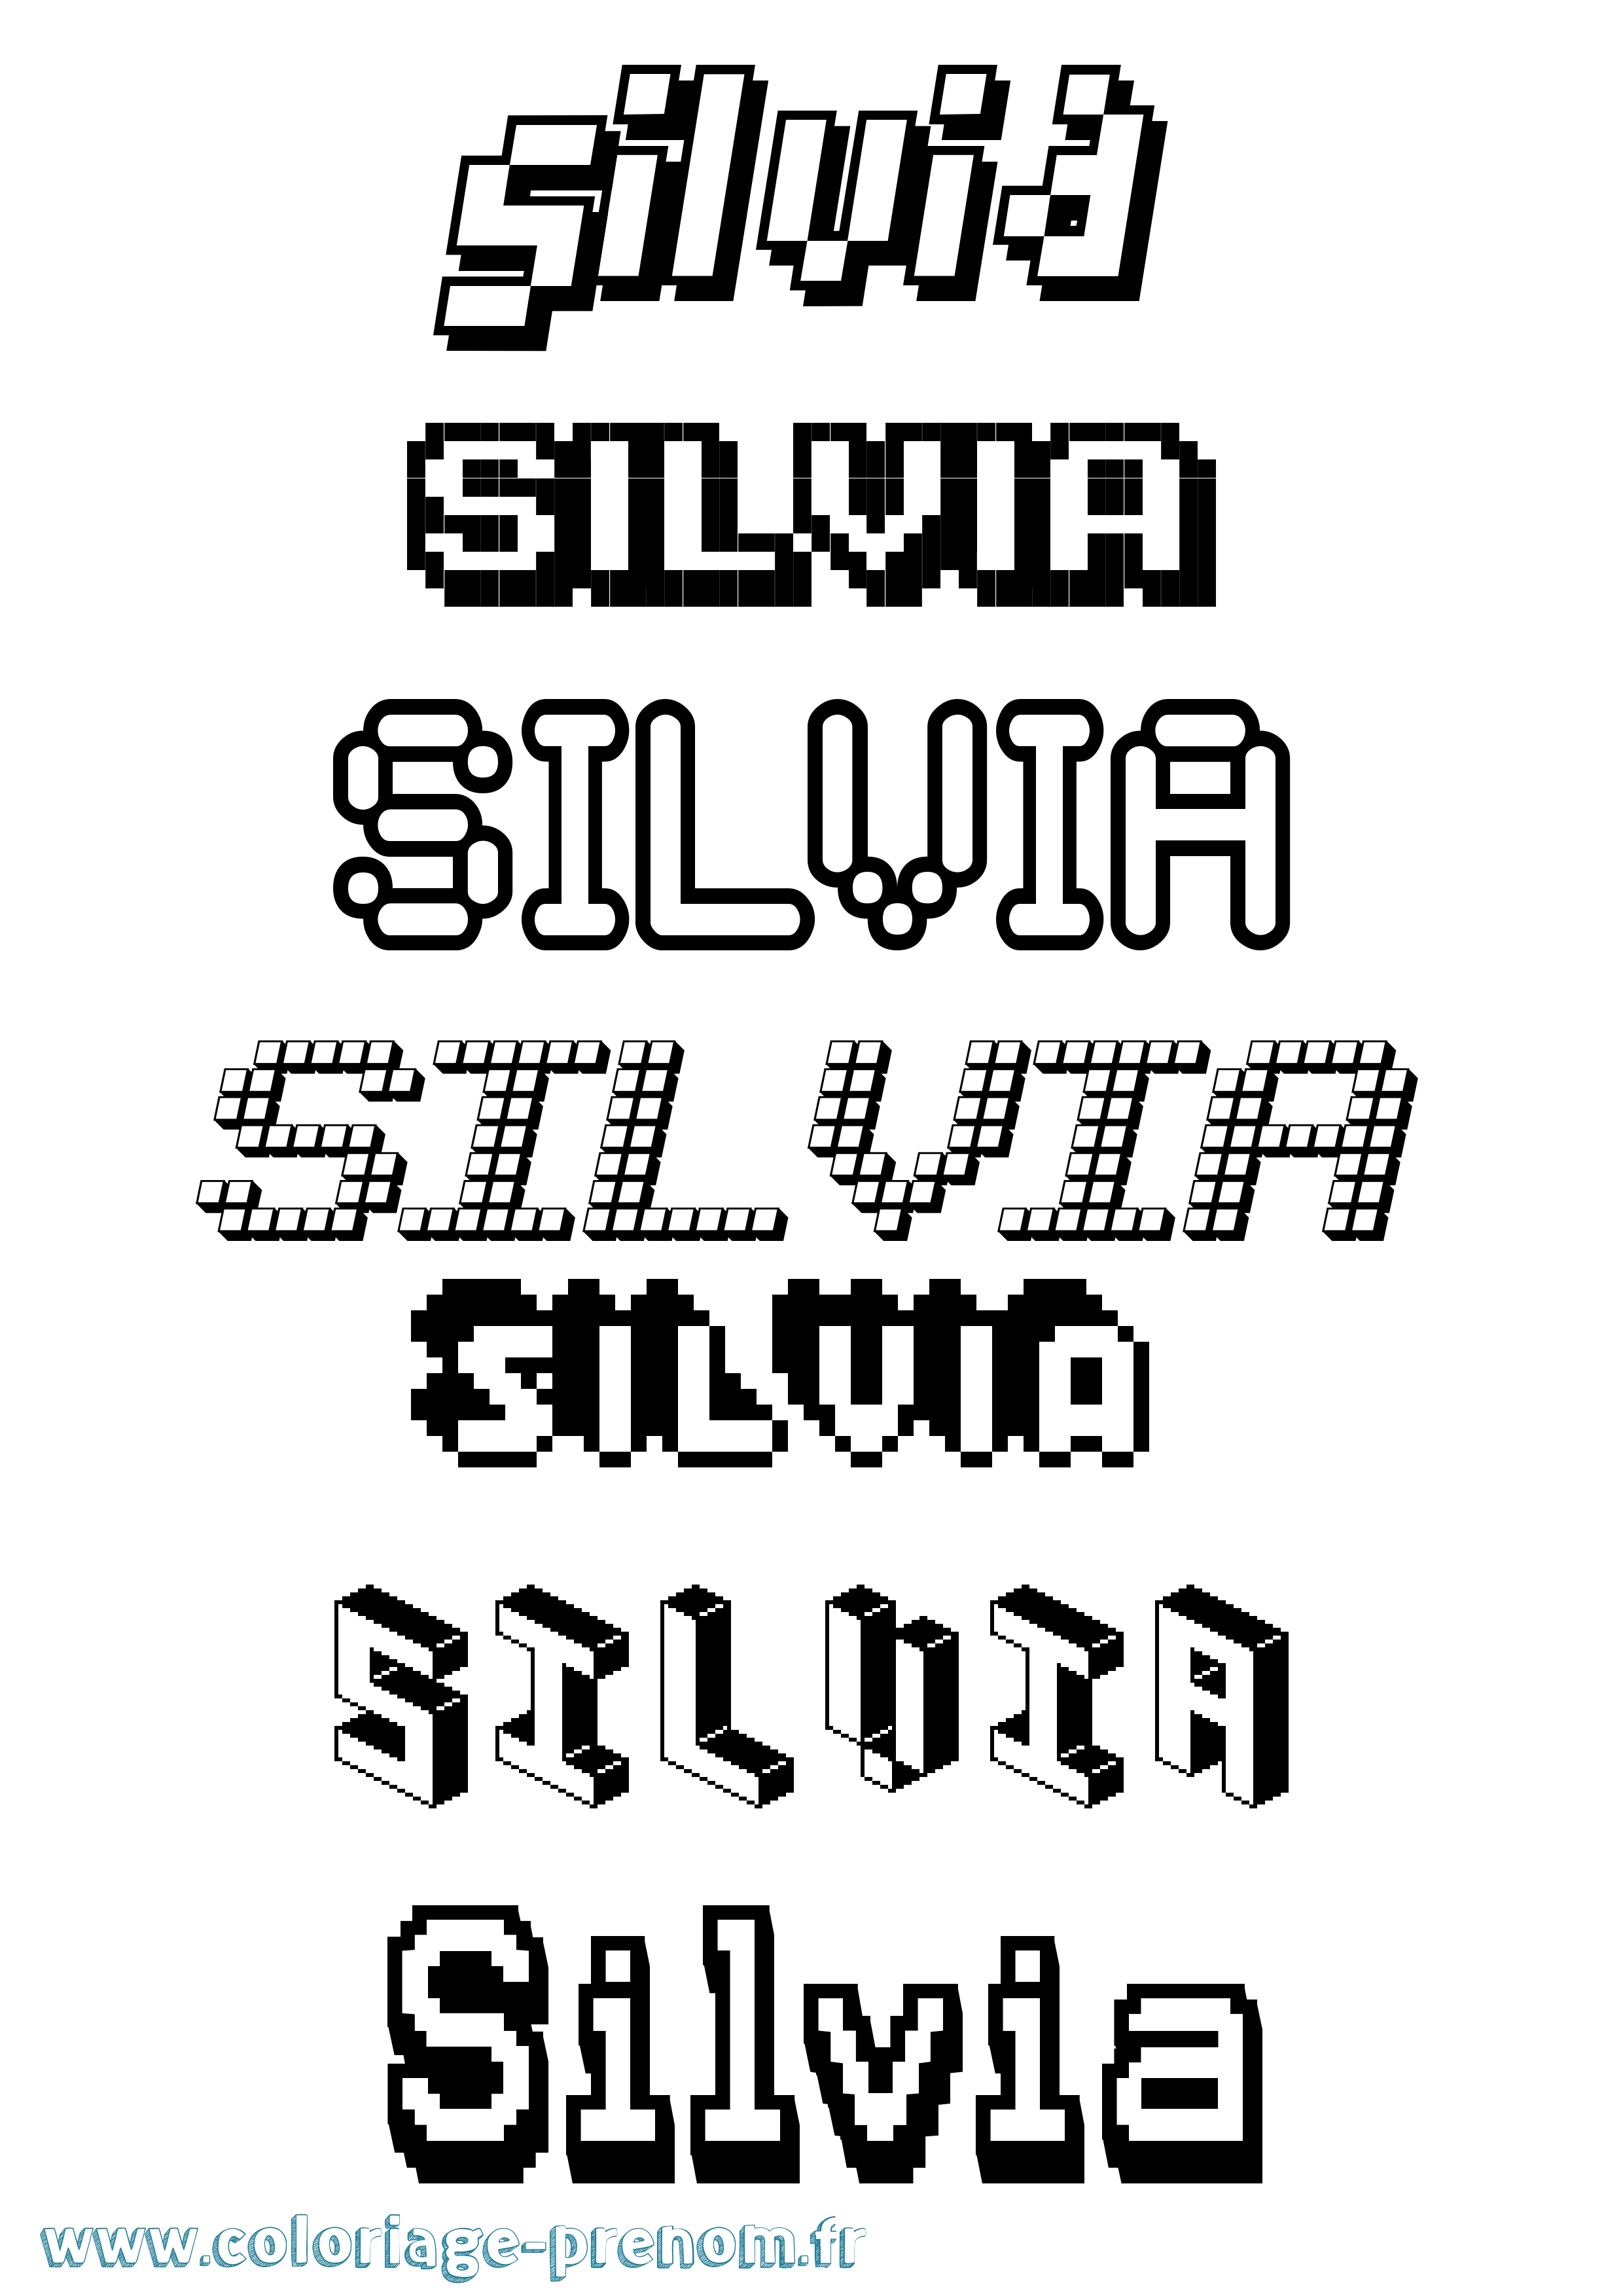 Coloriage prénom Silvia Pixel